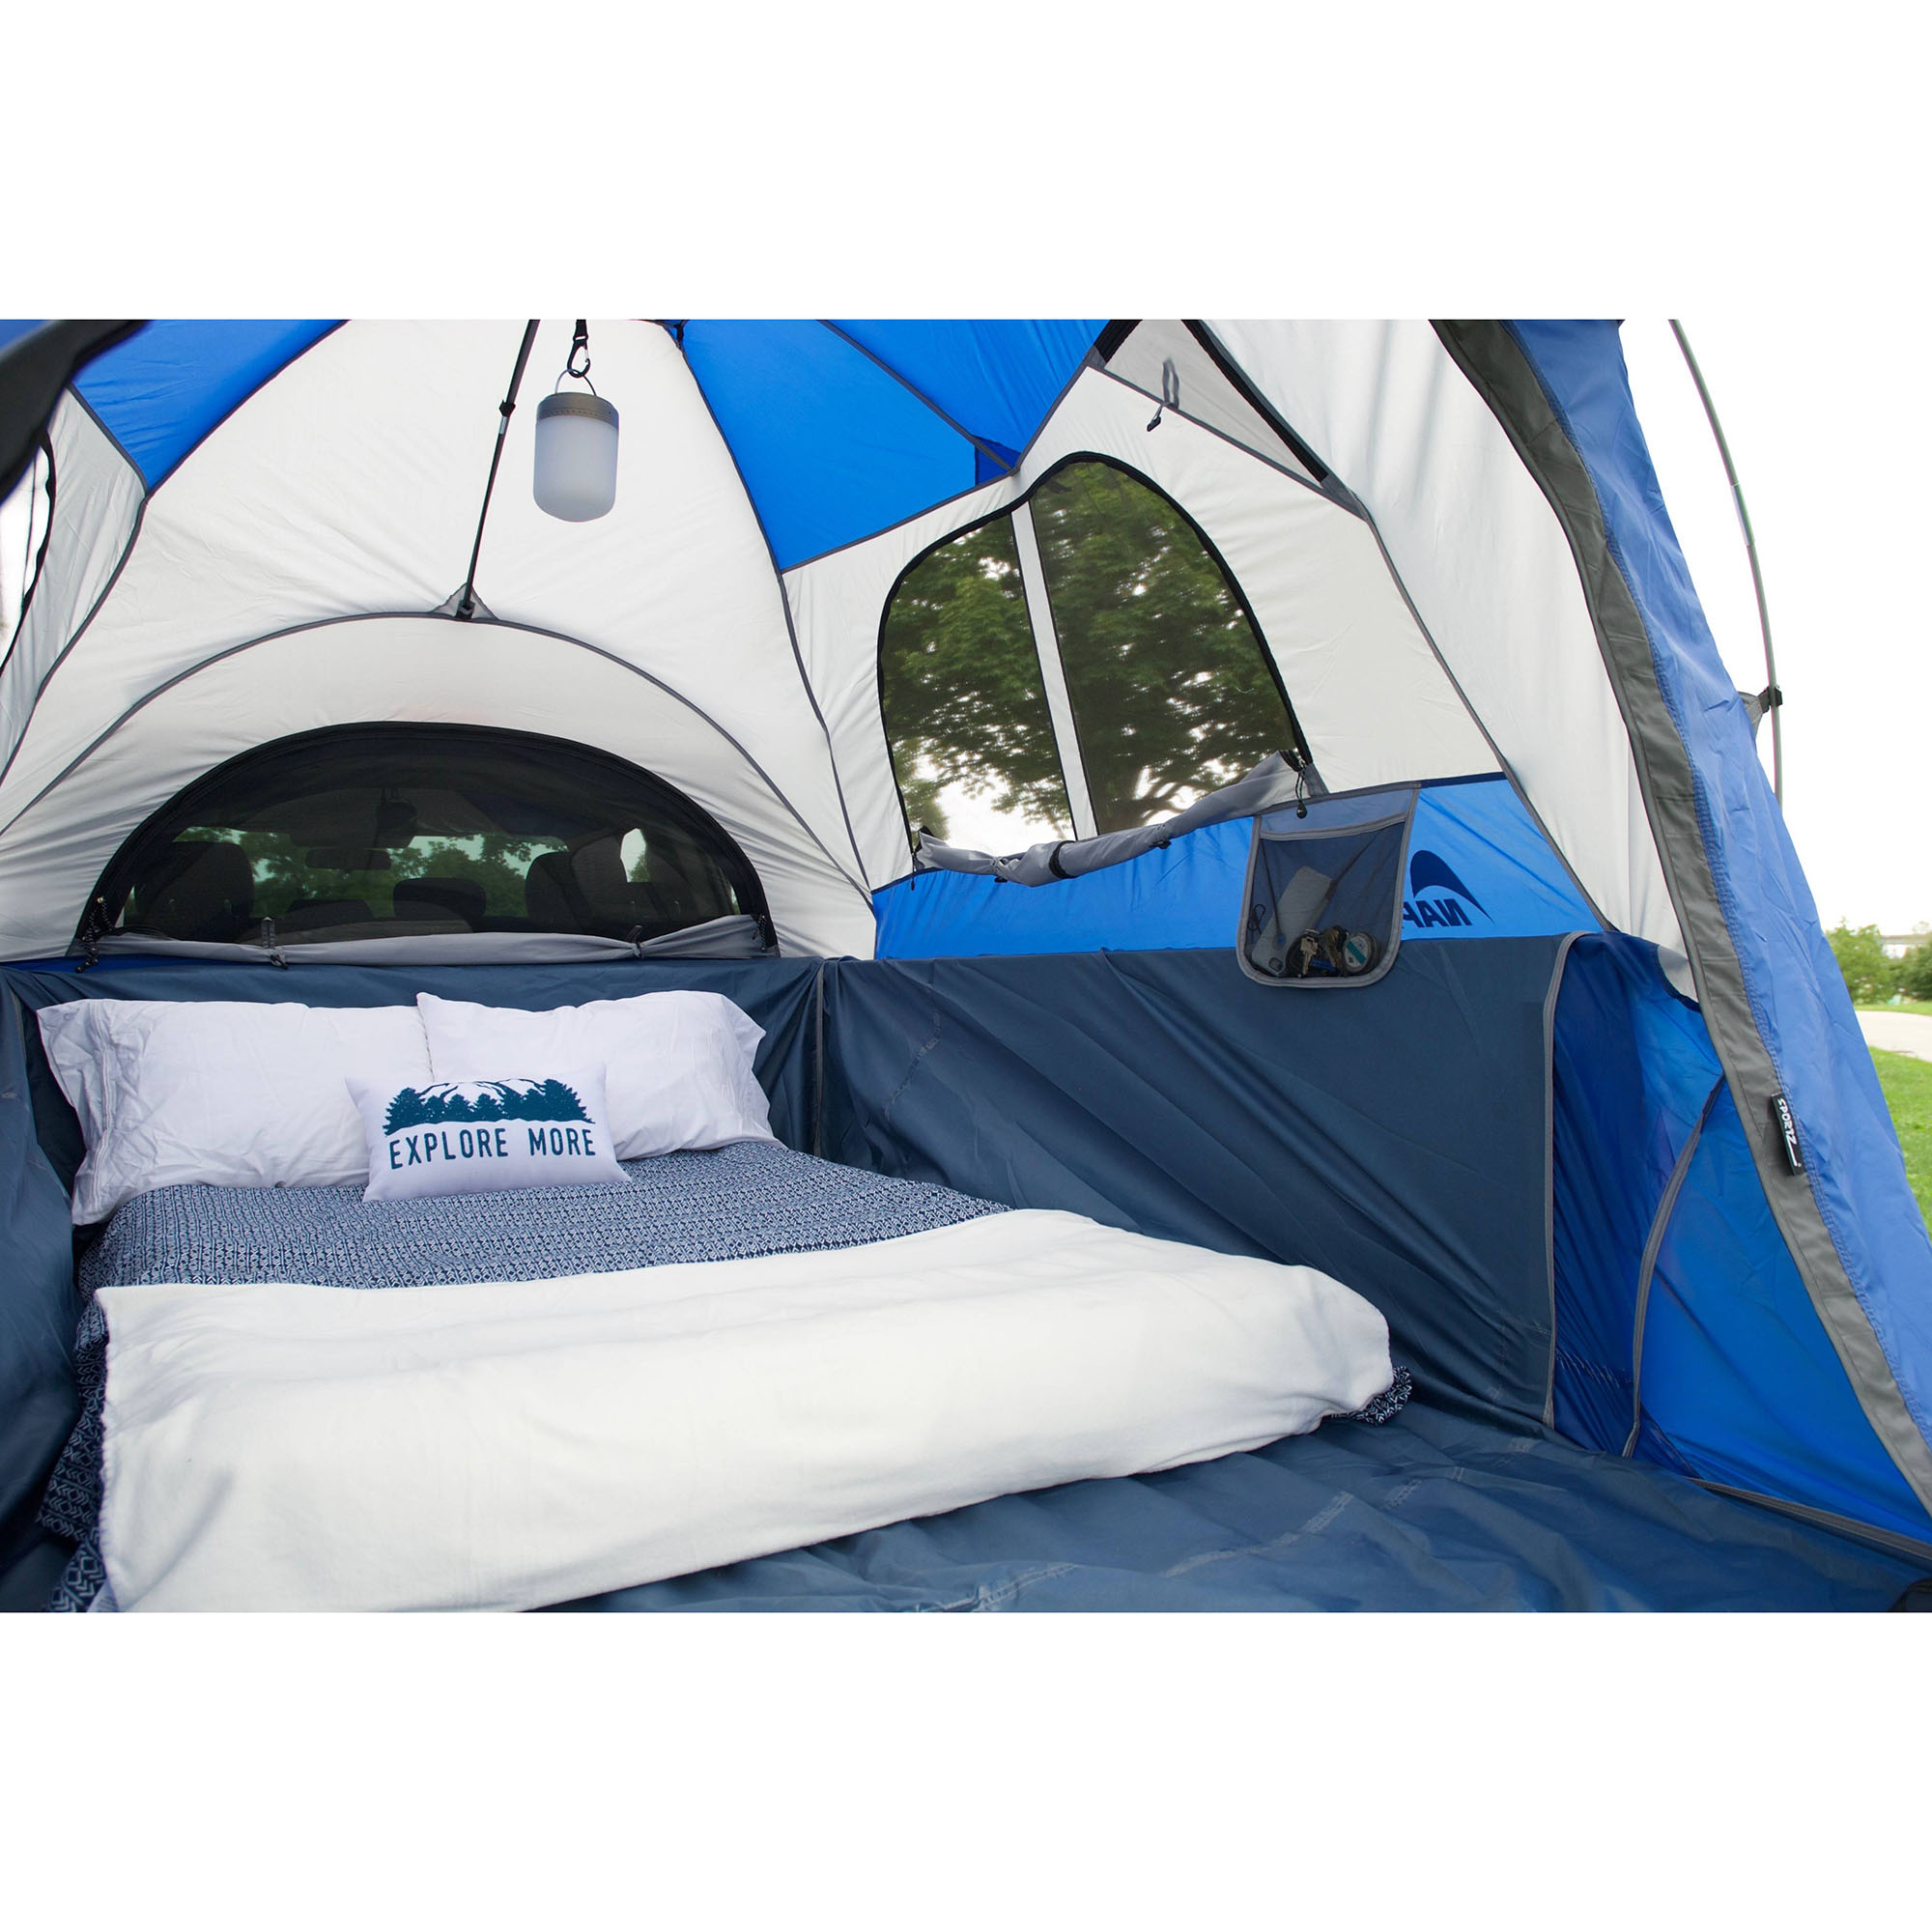 Napier Sportz Compact Short Truck Bed 2 Person Camping Tent w/ Sun